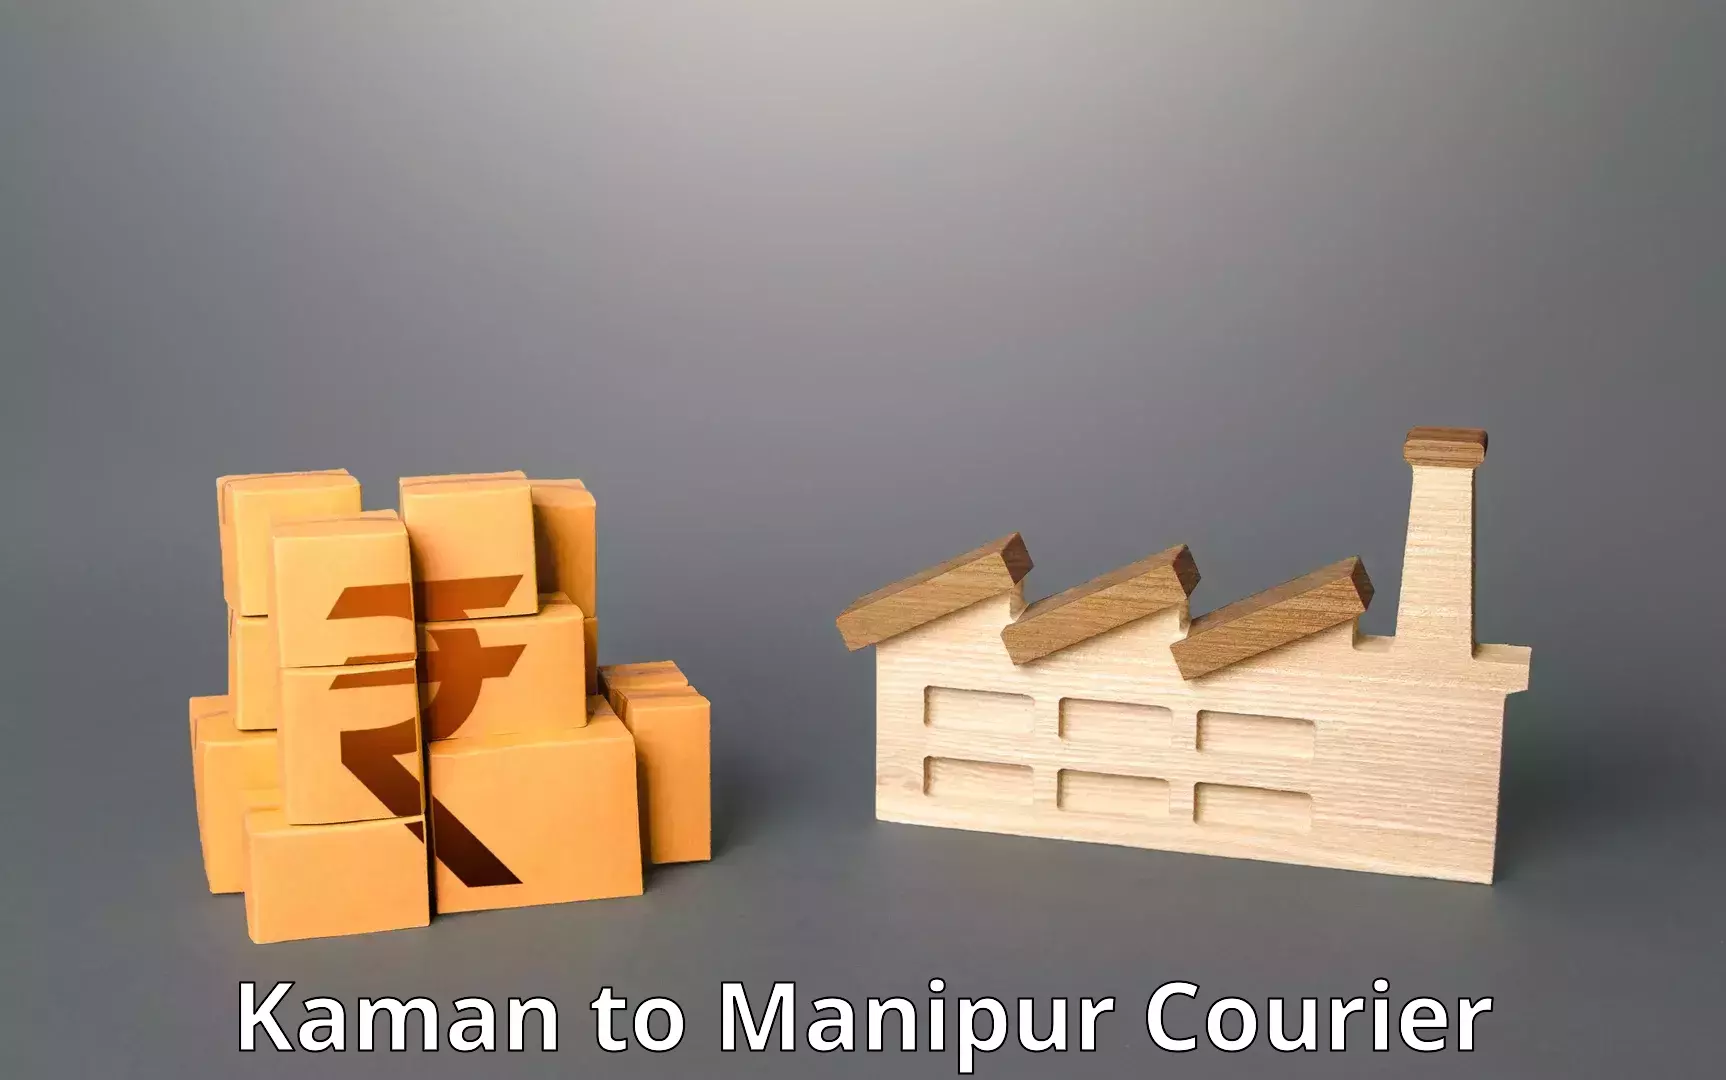 Supply chain efficiency Kaman to Chandel